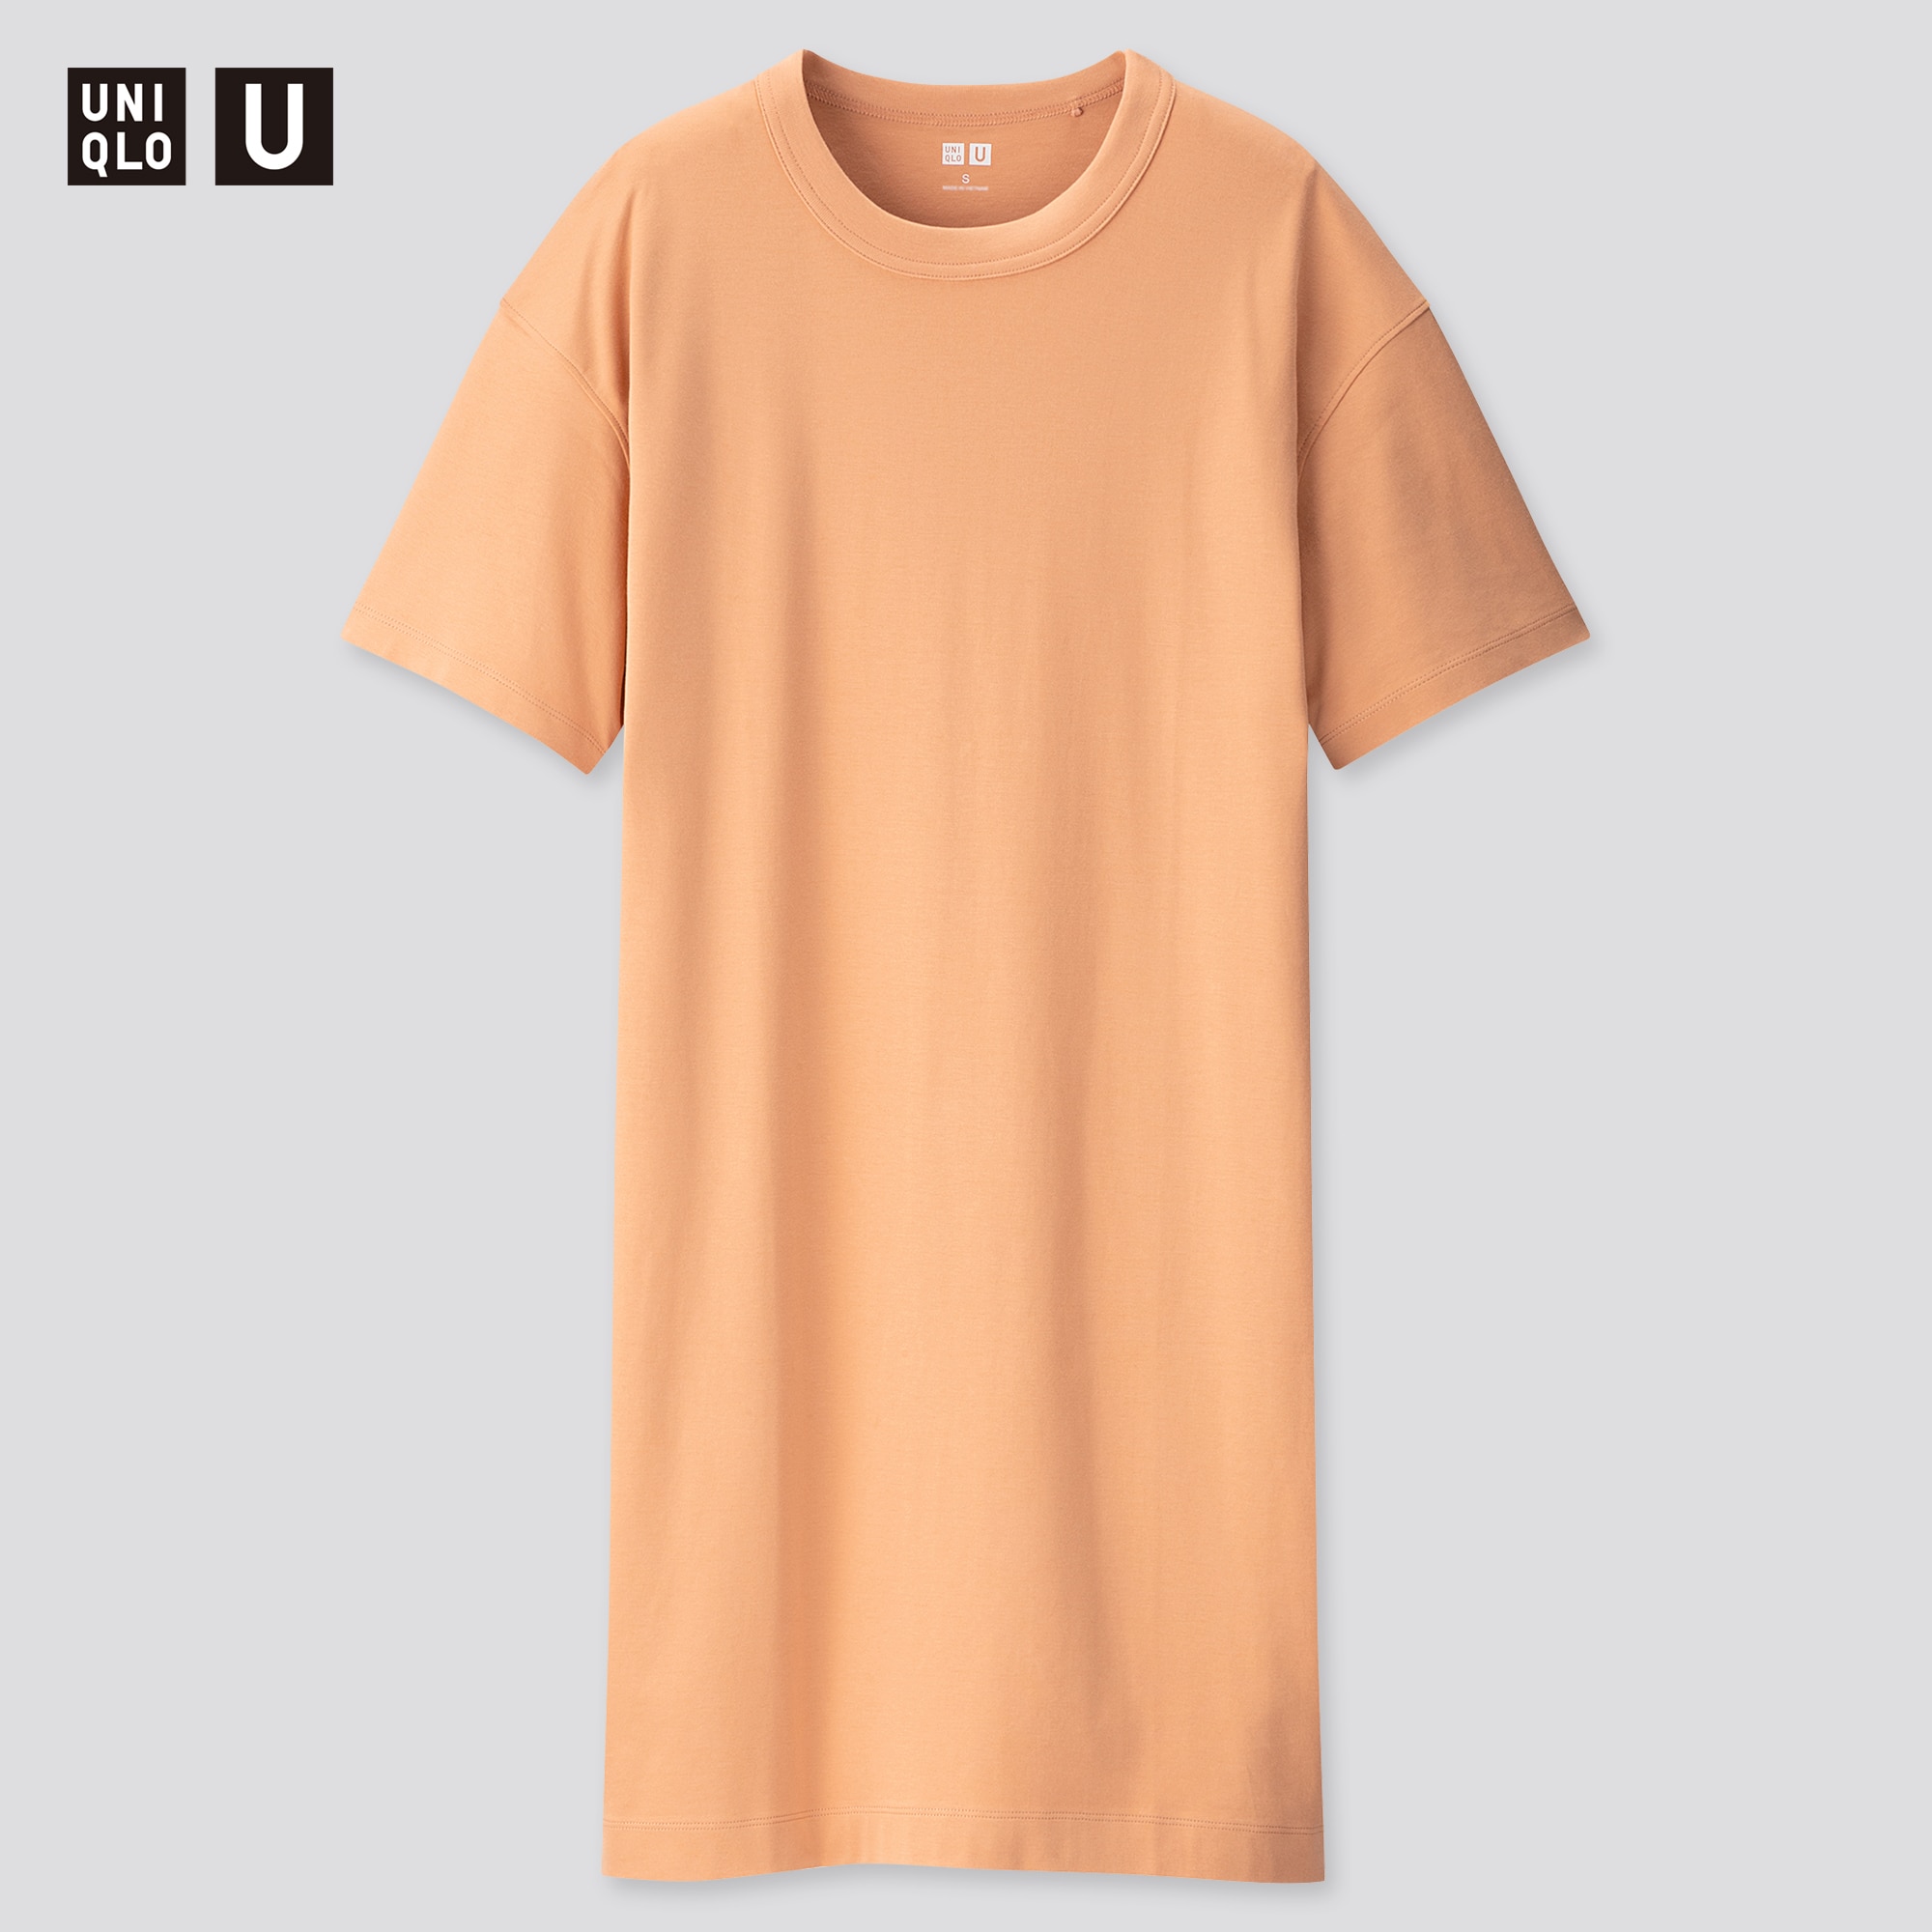 orange dress shirt womens